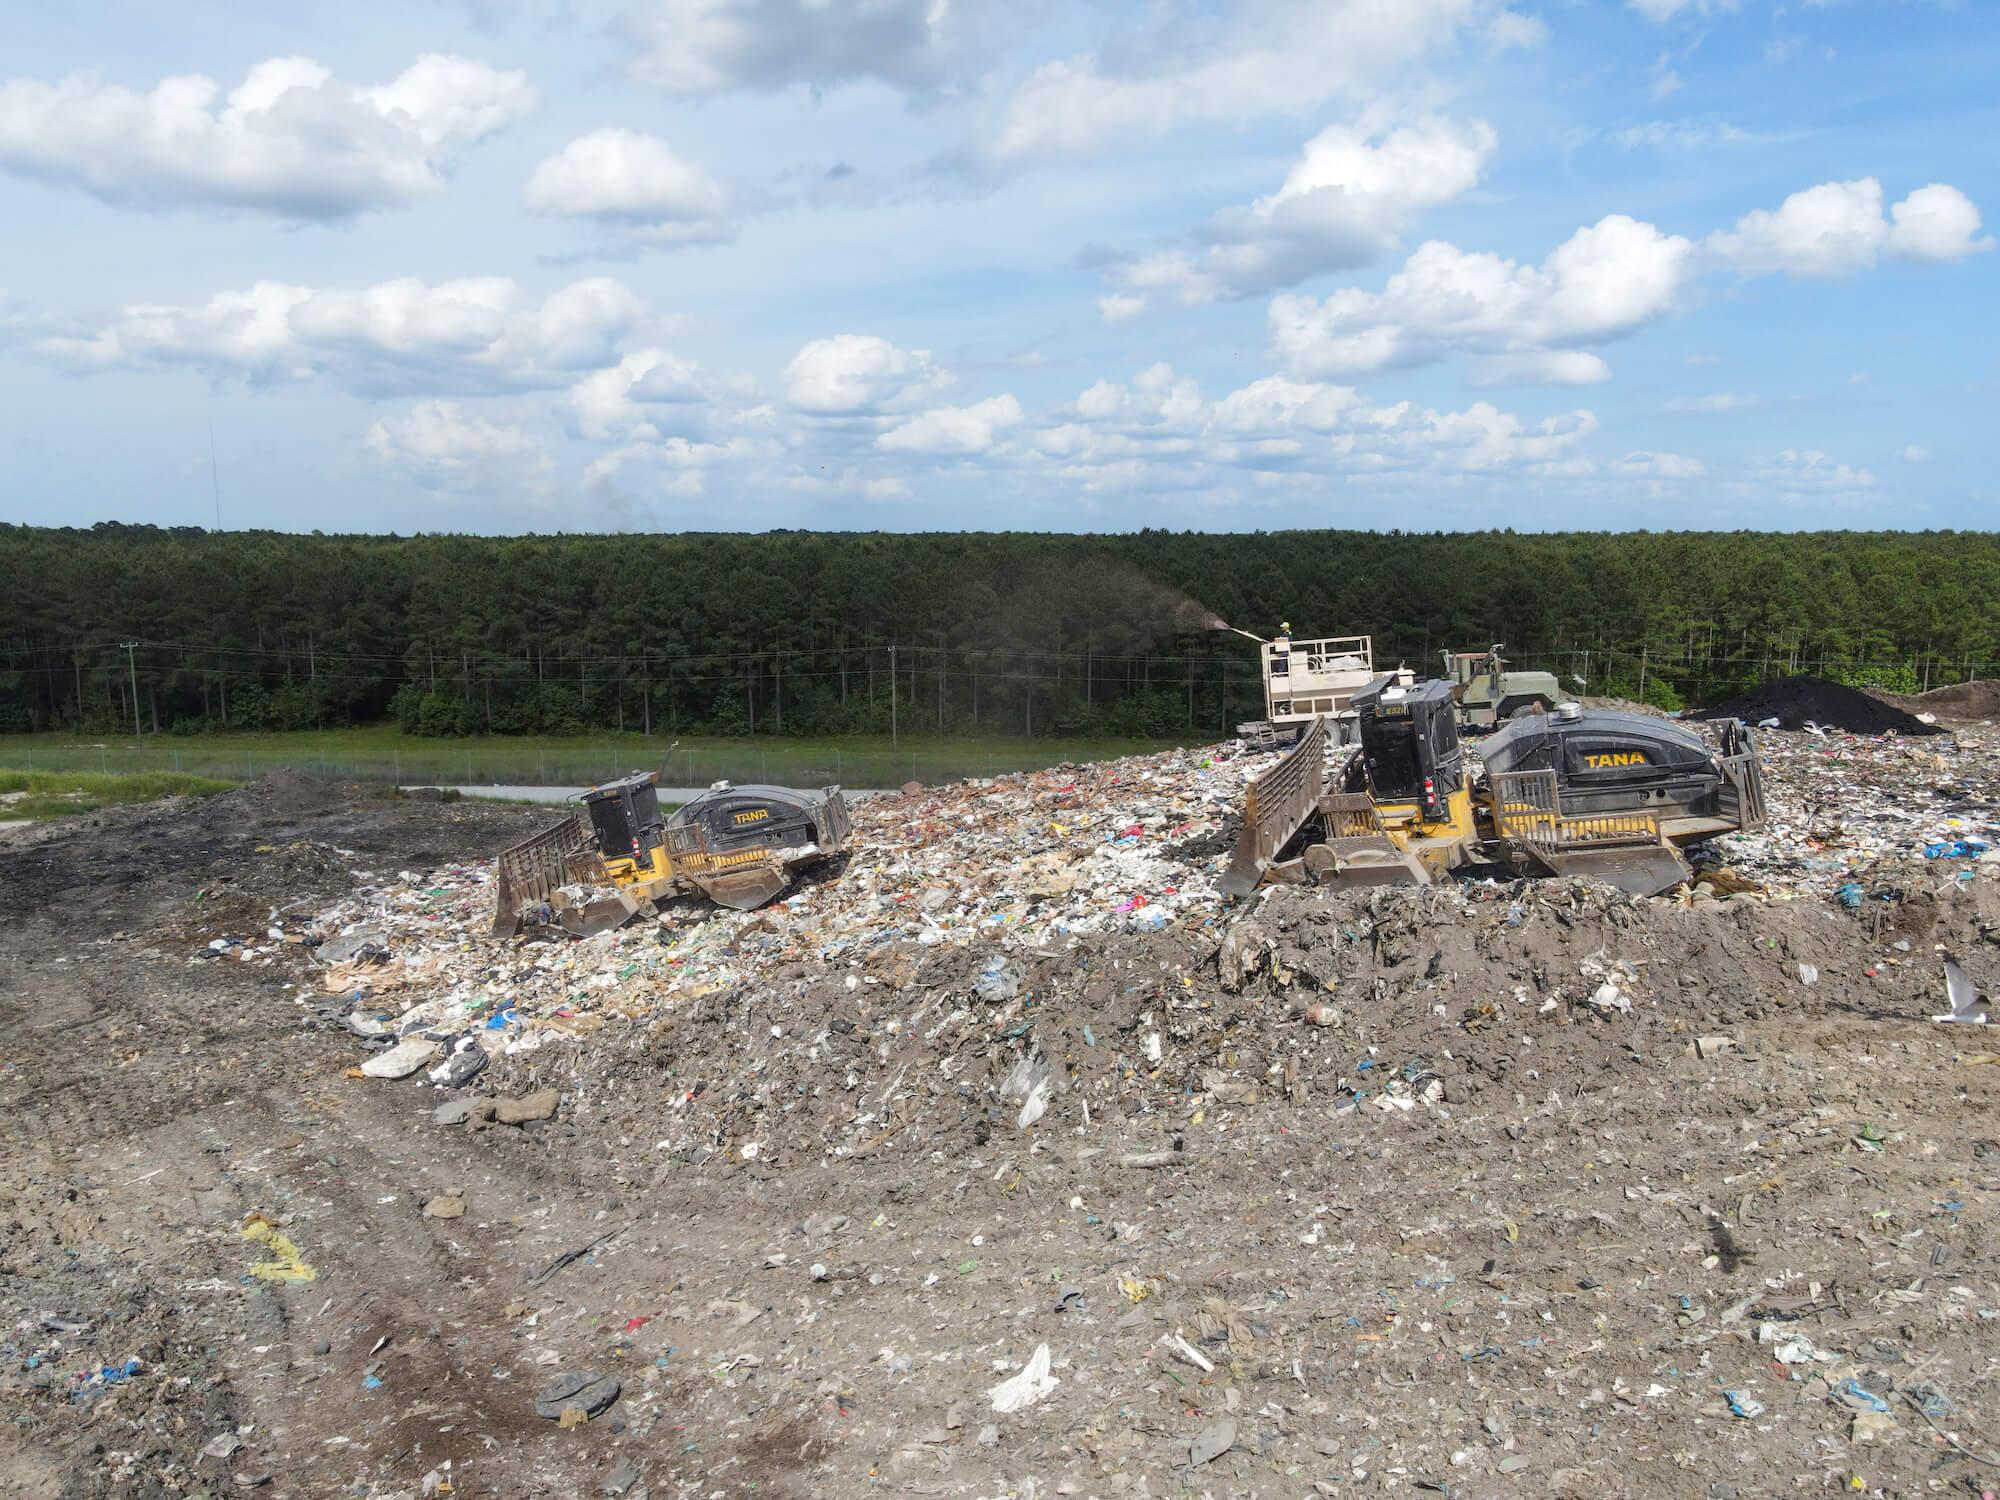 TANA landfill compactors working